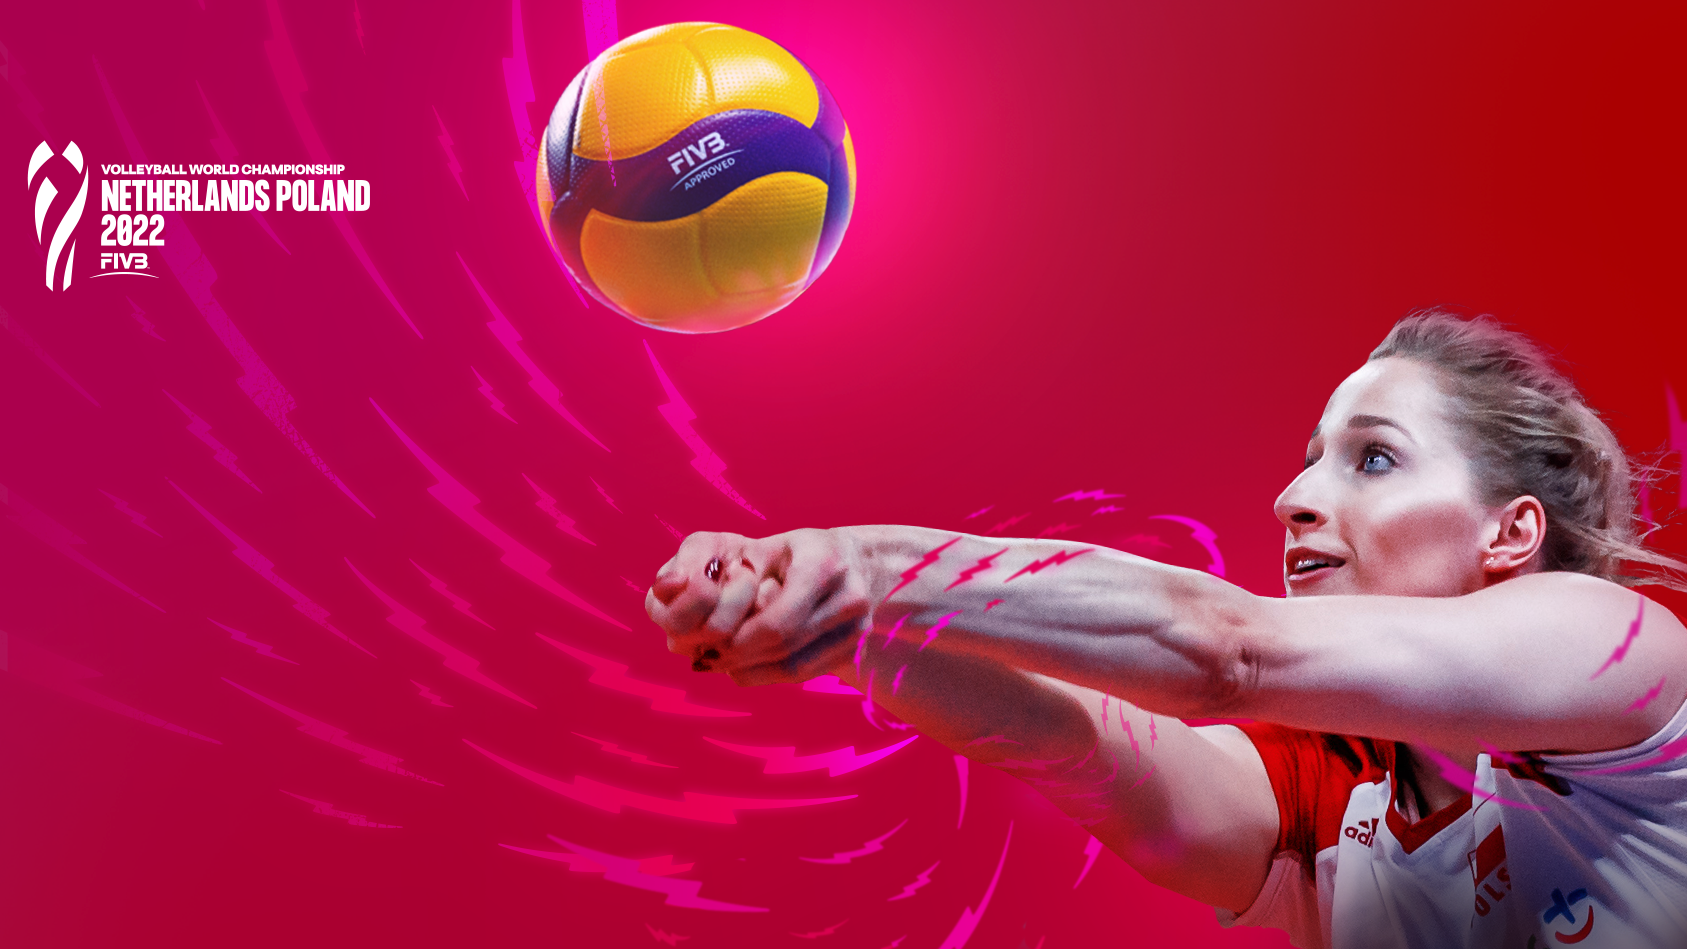 KATOWICE, POLAND - Poland Vs Mexico At Volleyball World Championship - Aug  28, 2022 - Dreamstime